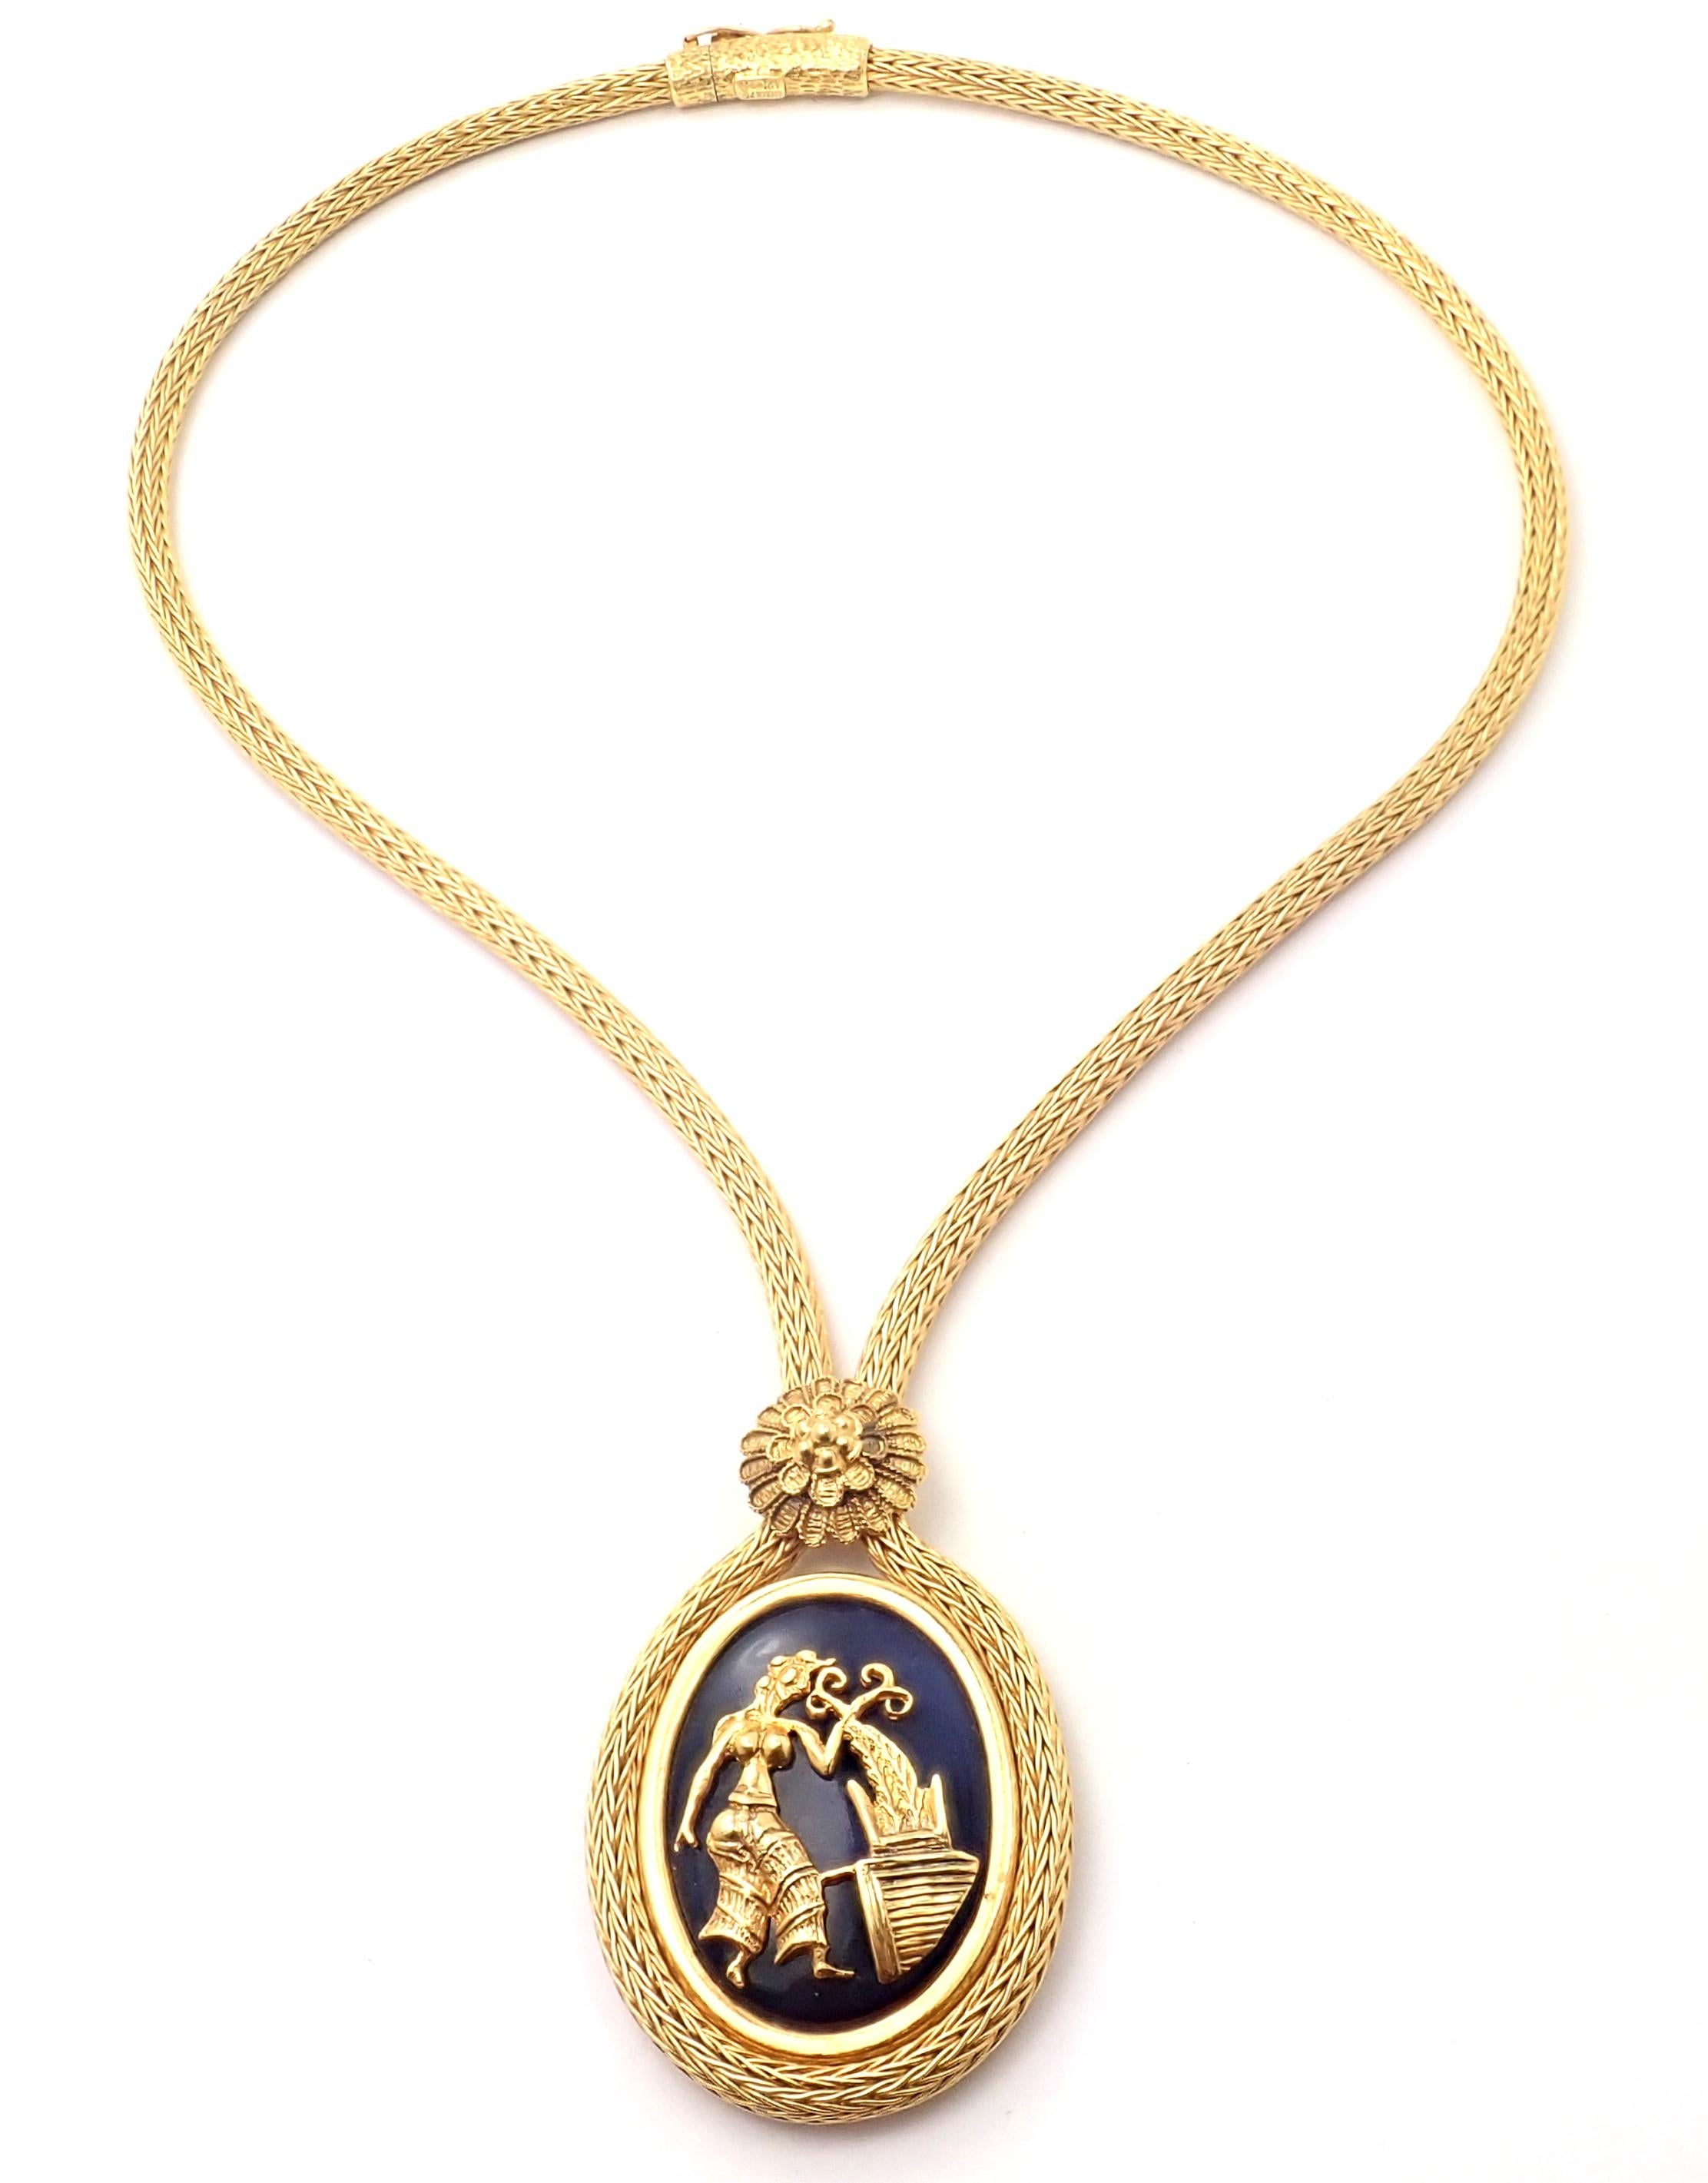 18k Yellow Gold Sodalite Pendant Lariat Pendant Necklace By Illias Lalaounis Greece.
With Sodalite stone 1 3/4